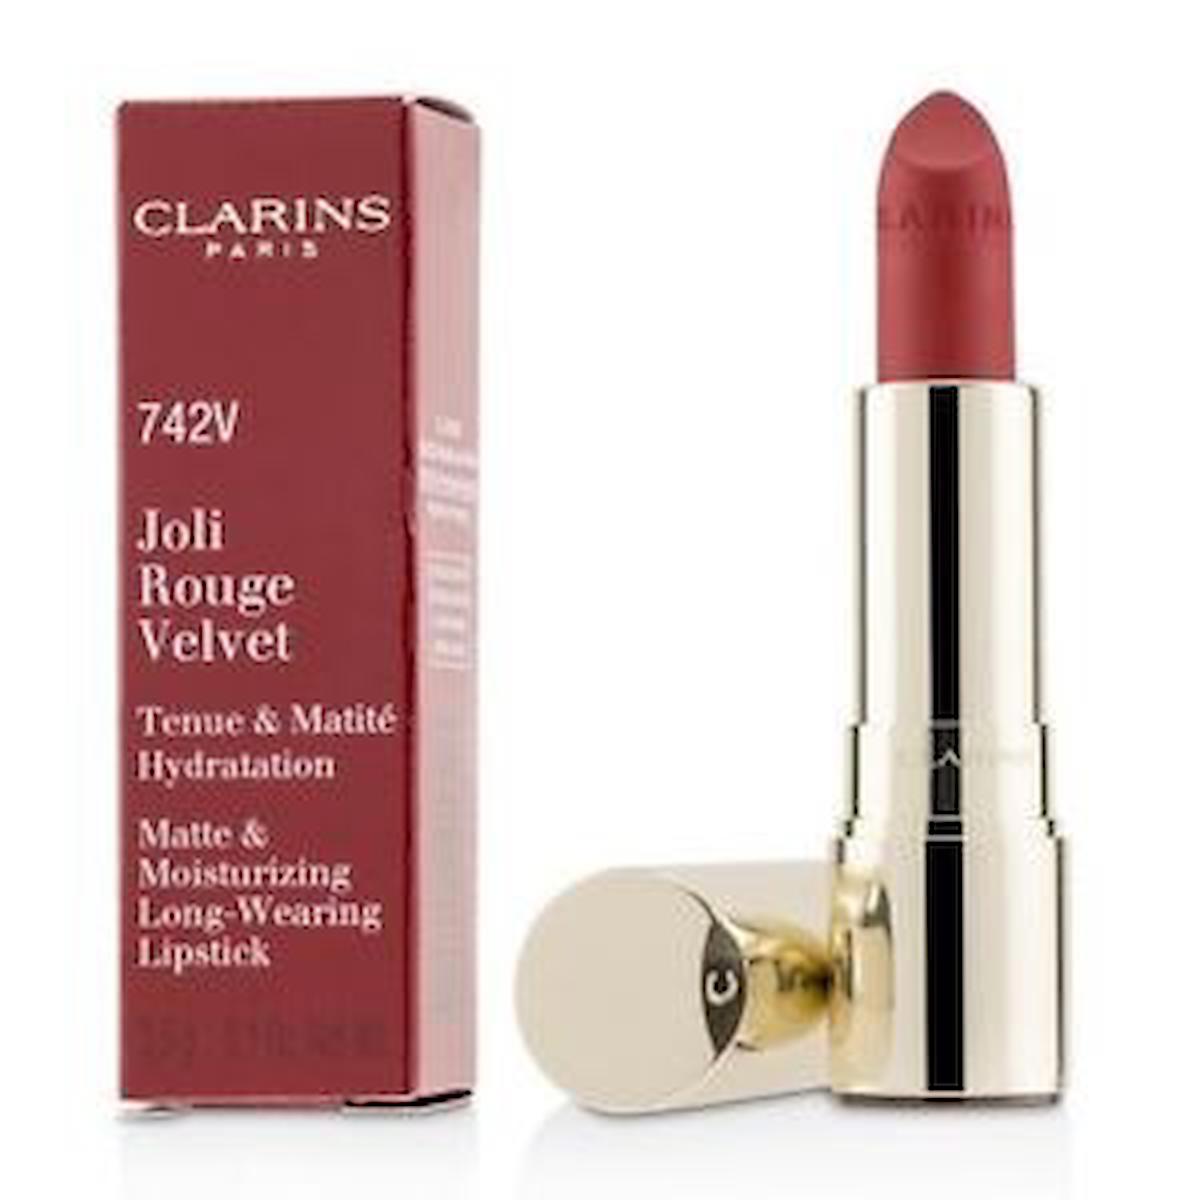 Clarins 742V Joli Rouge Kalıcı Kadife Krem Lipstick Ruj